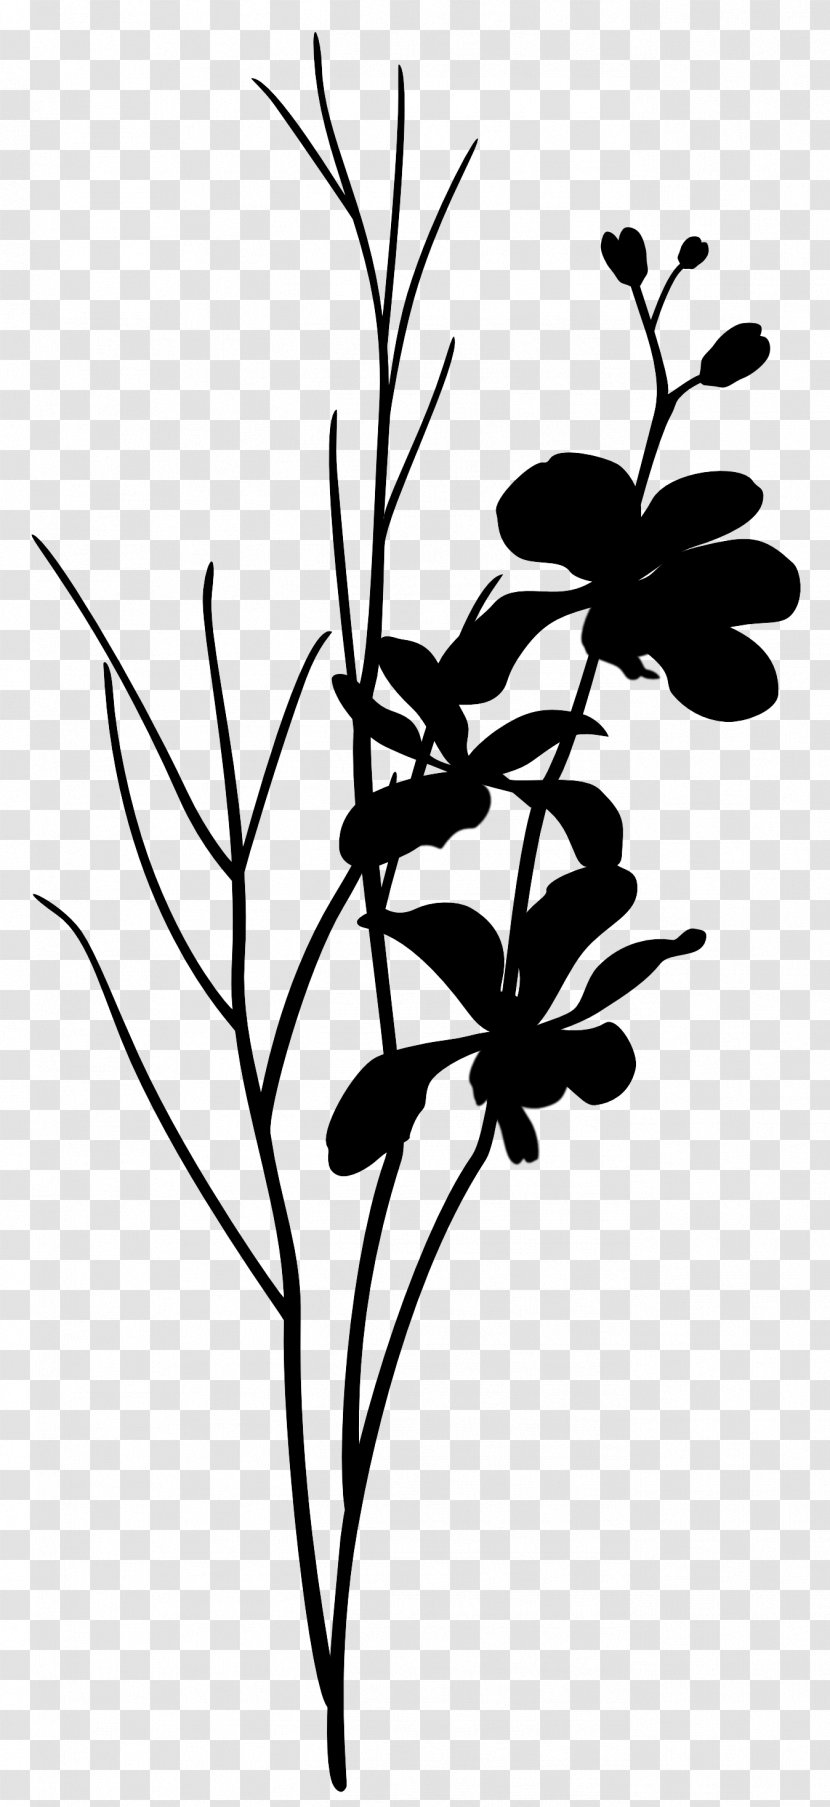 Twig Plant Stem Leaf Clip Art Silhouette - Blackandwhite Transparent PNG